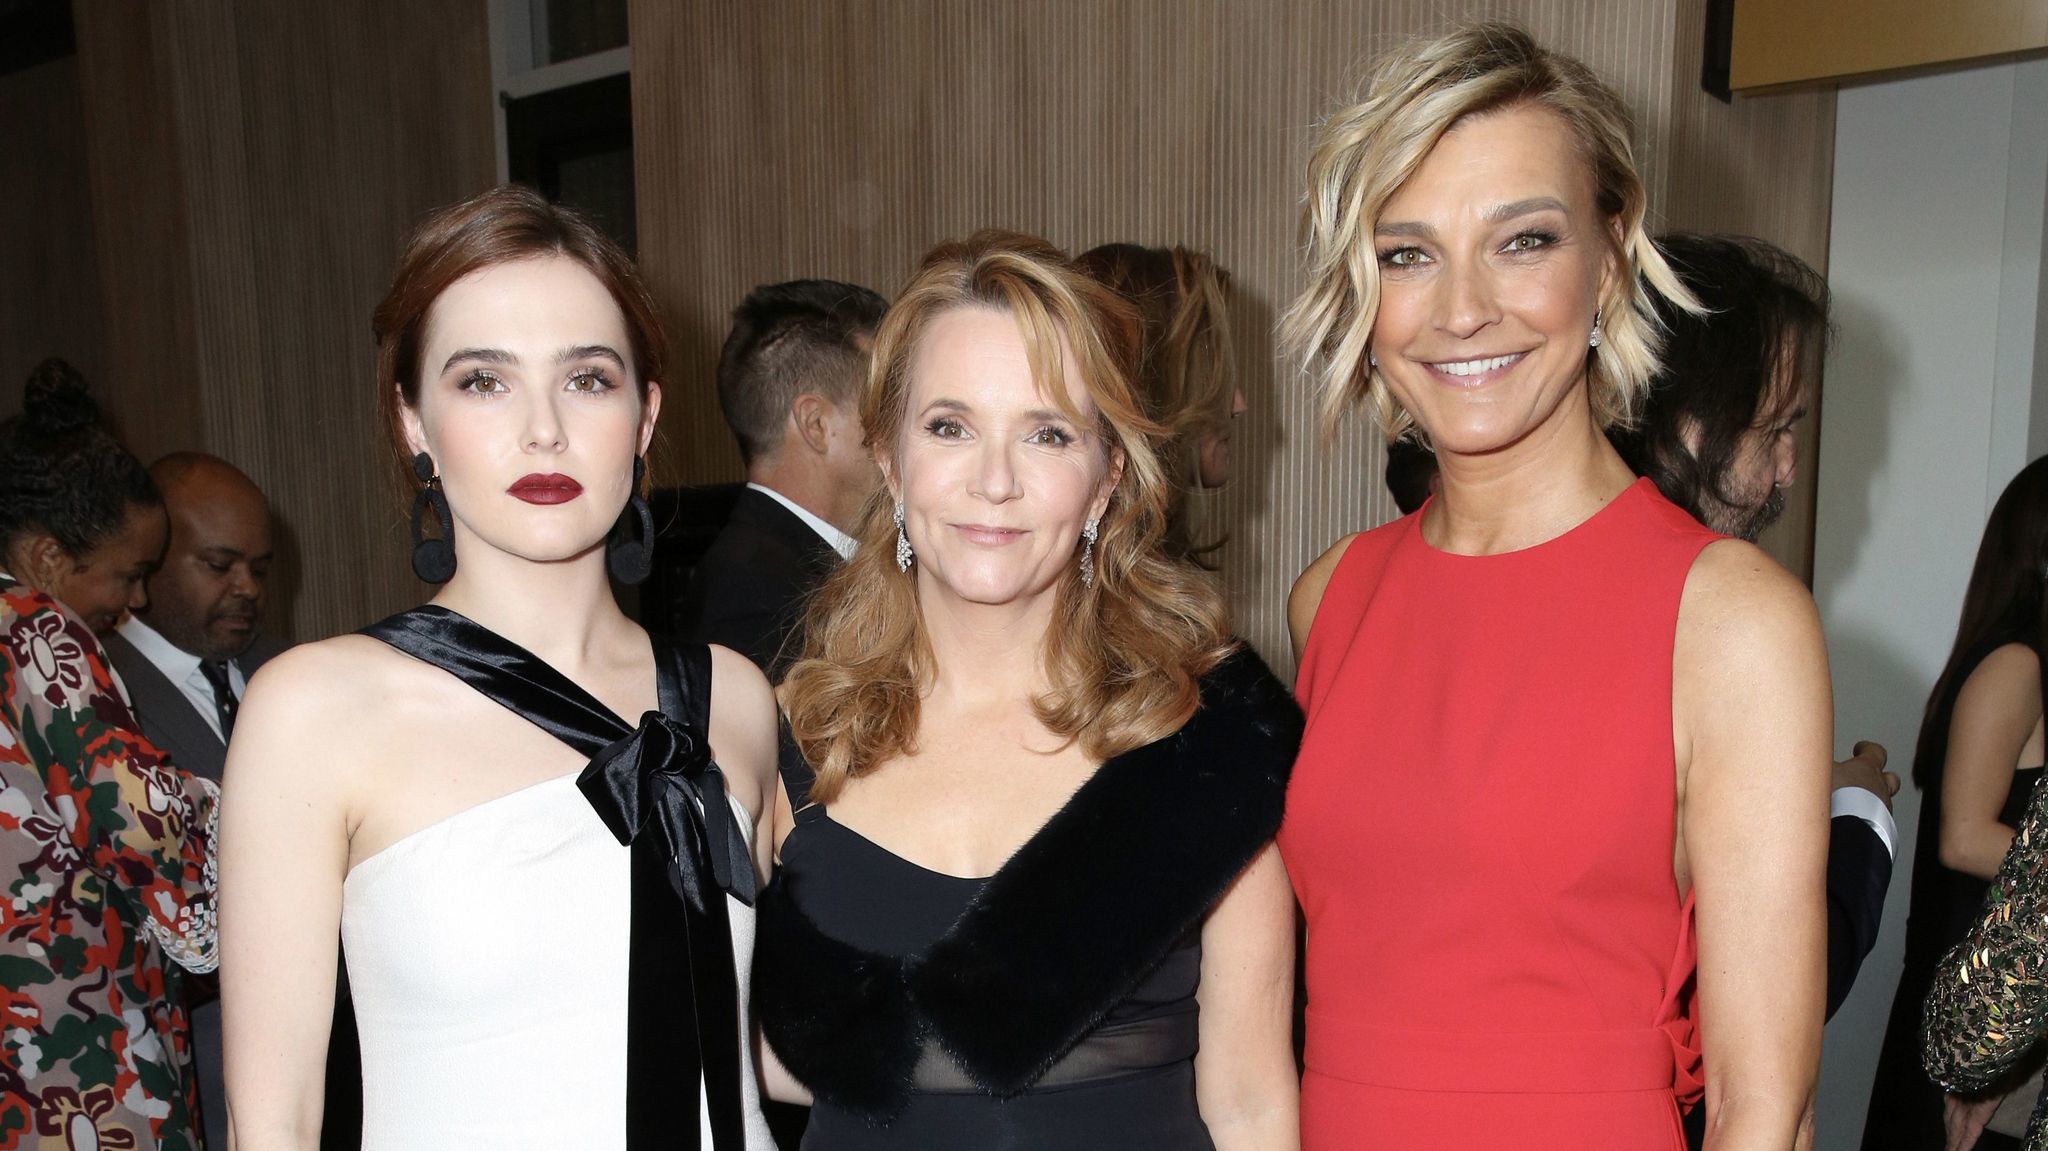 Zoey Deutch, left, her mom, Lea Thompson, and Max Mara brand ambassador Nicola Maramotti attend the Women in Film Crystal + Lucy Awards.